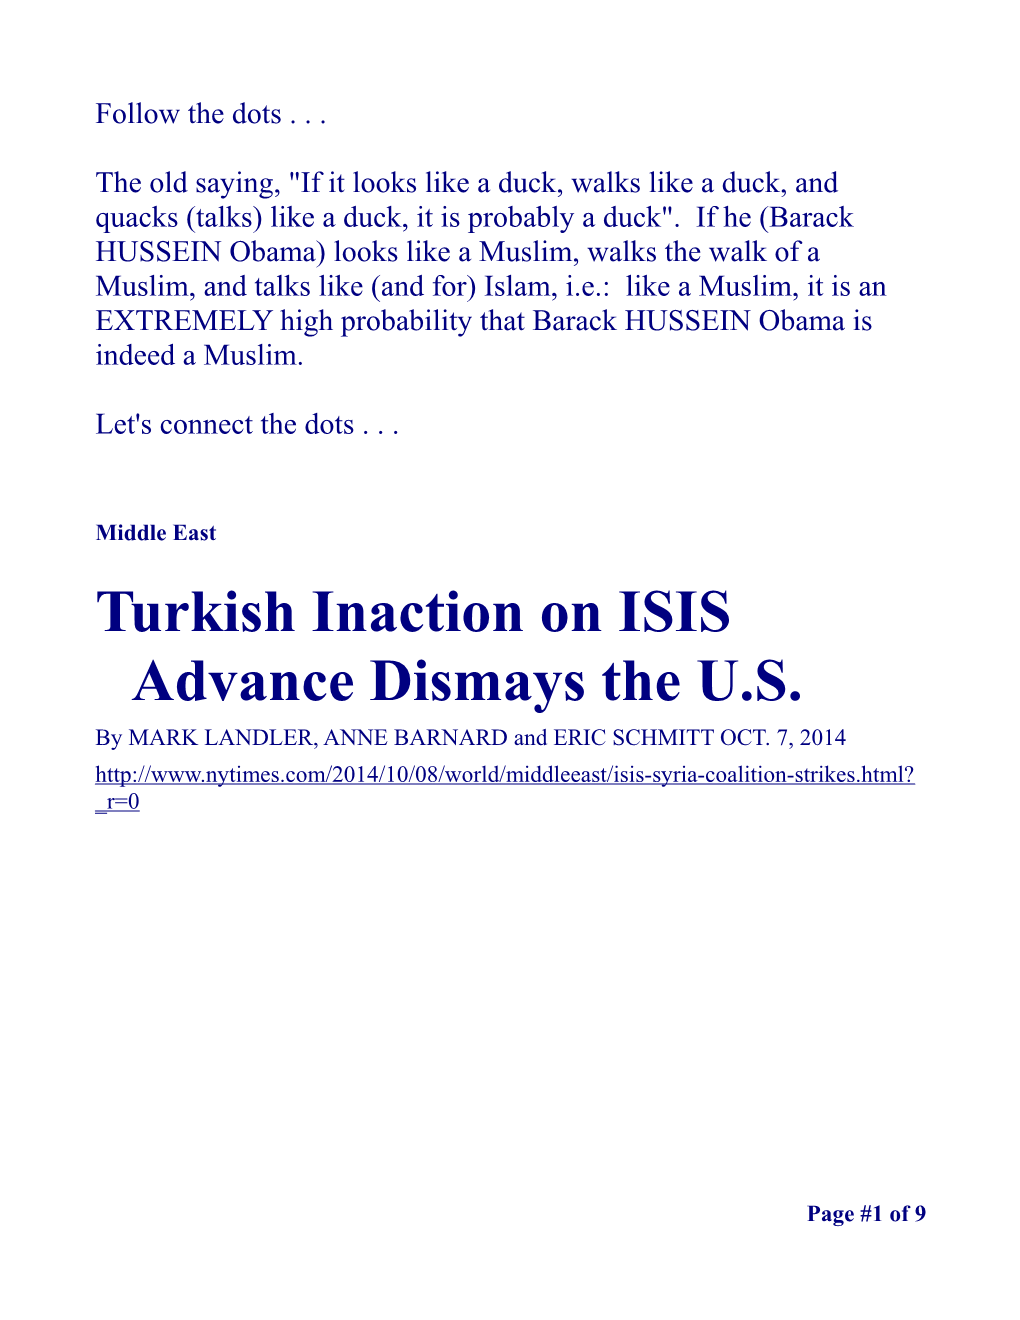 Turkish Inaction on ISIS Advance Dismays the U.S